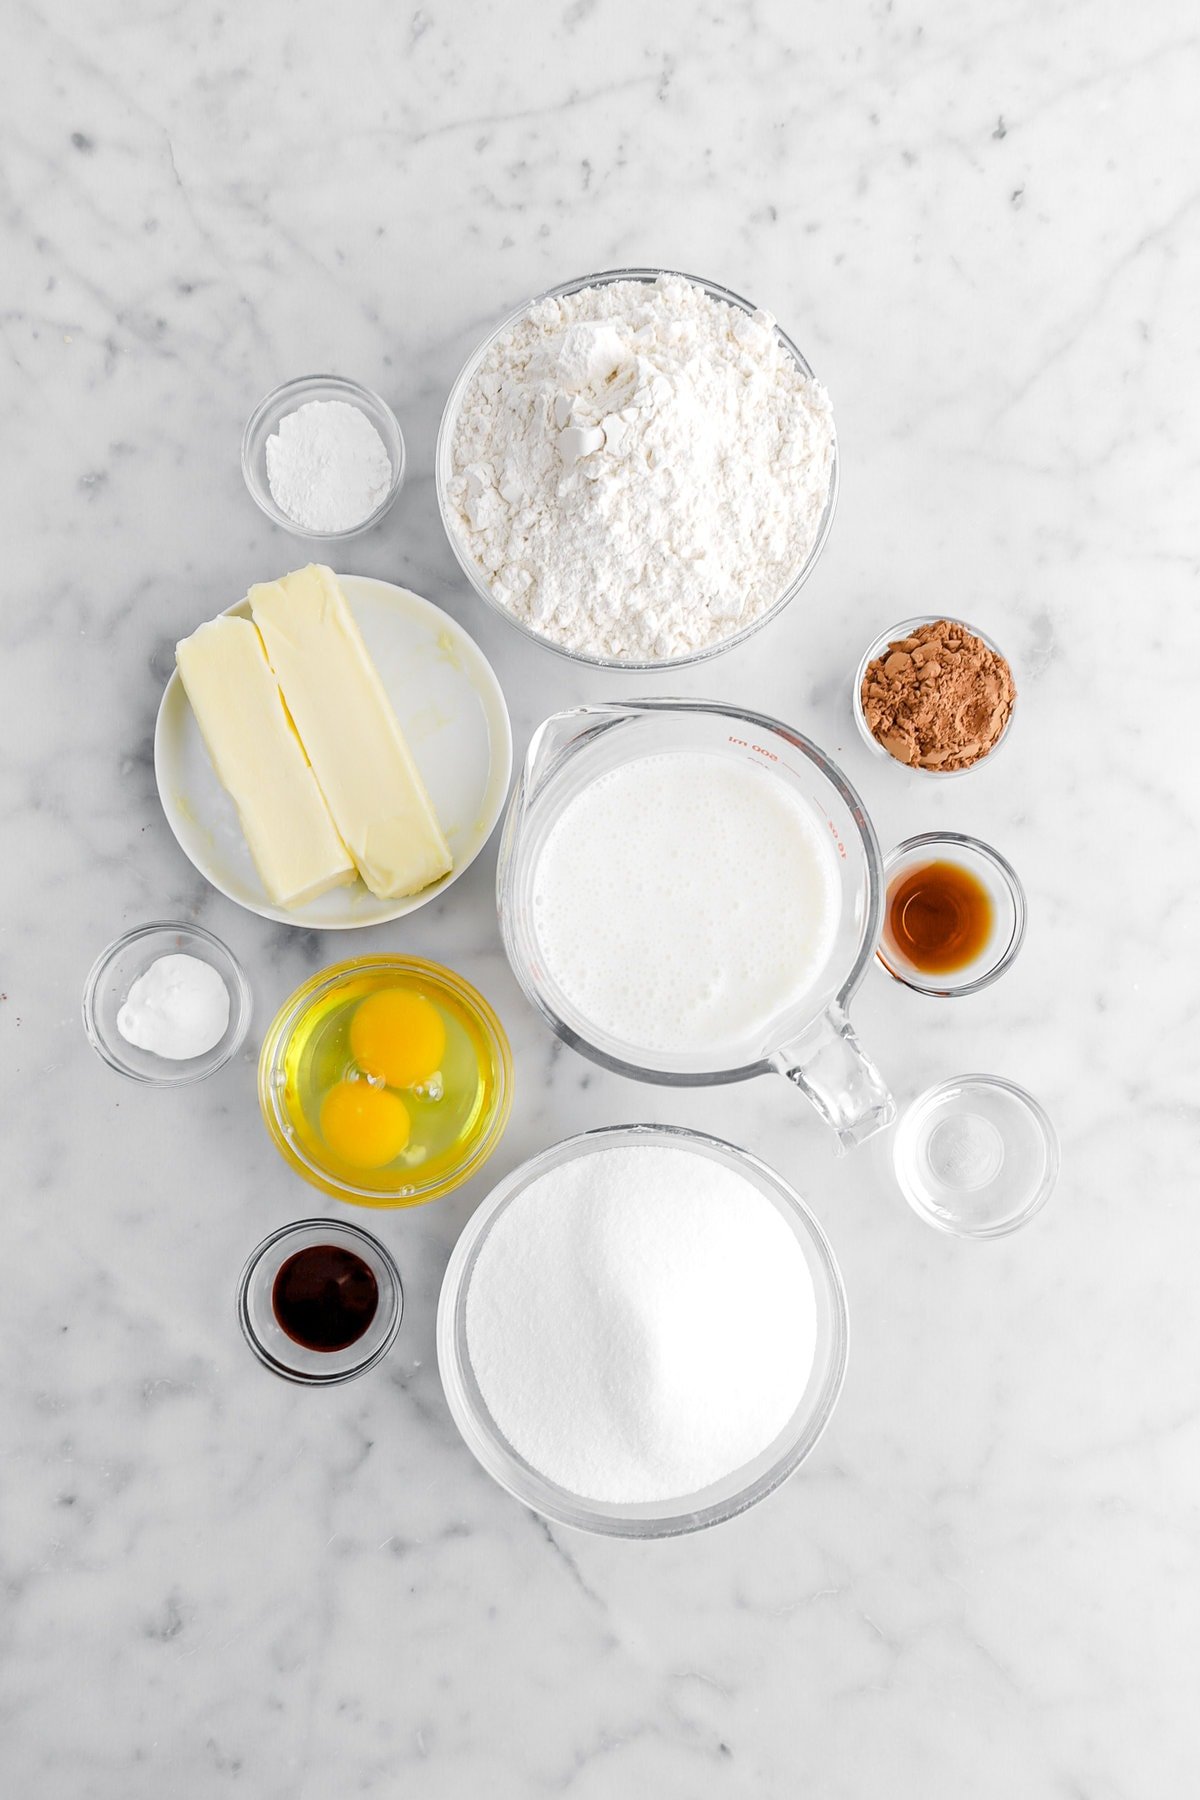 flour, baking powder, butter, buttermilk, cocoa powder, vanilla, vinegar, sugar, red food dye, eggs, and baking soda on marble surface.